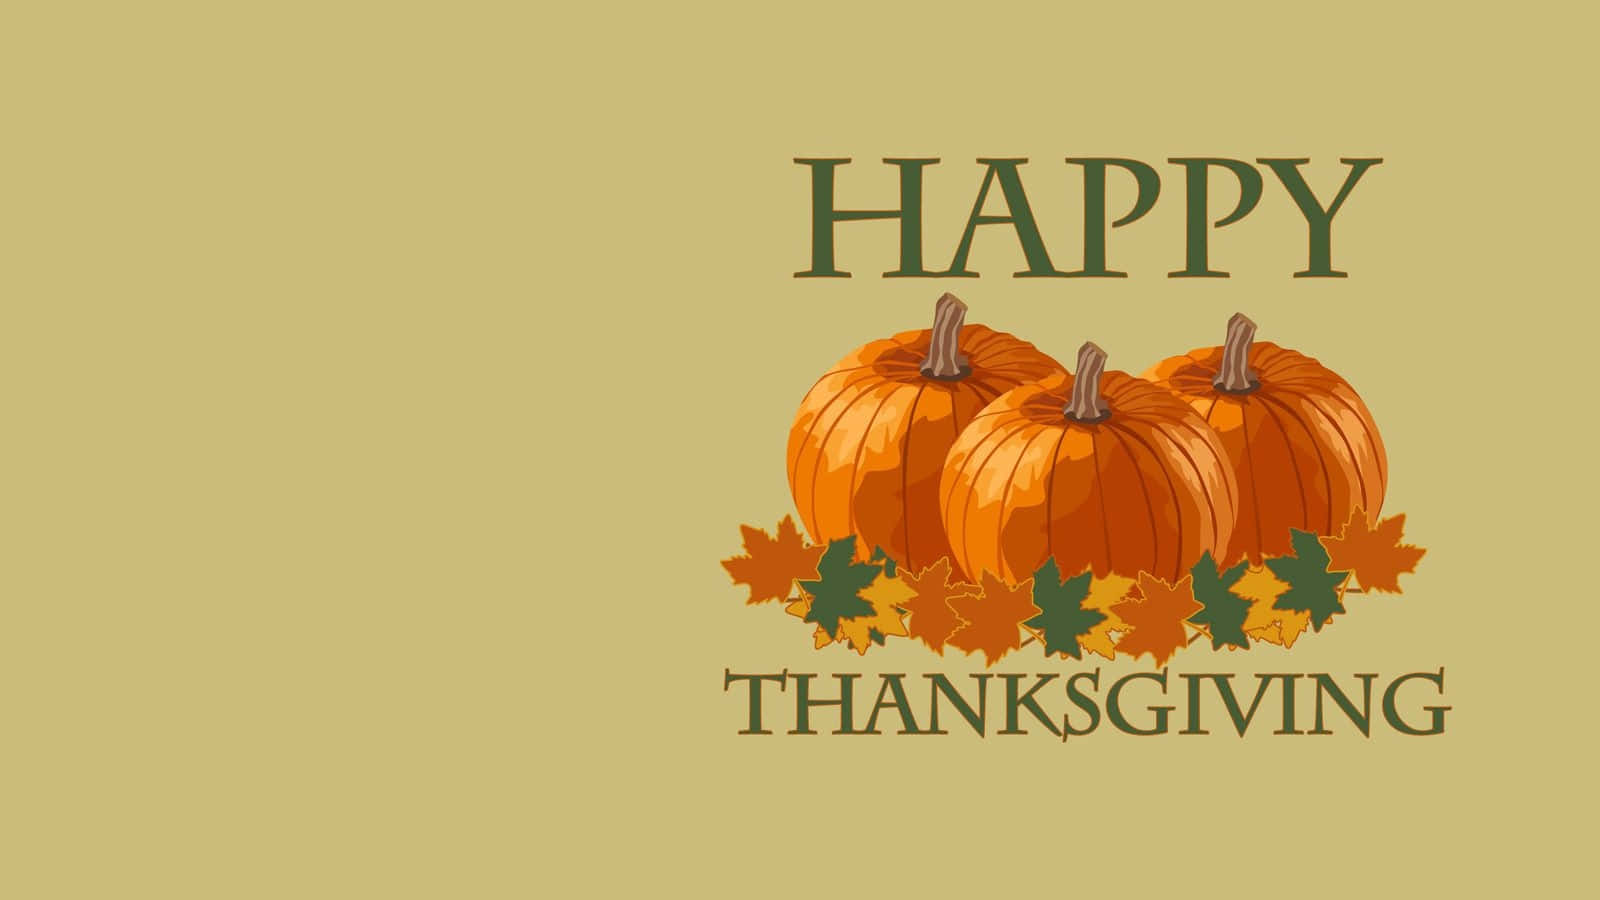 Three Pumpkins Happy Thanksgiving Greeting Card Wallpaper